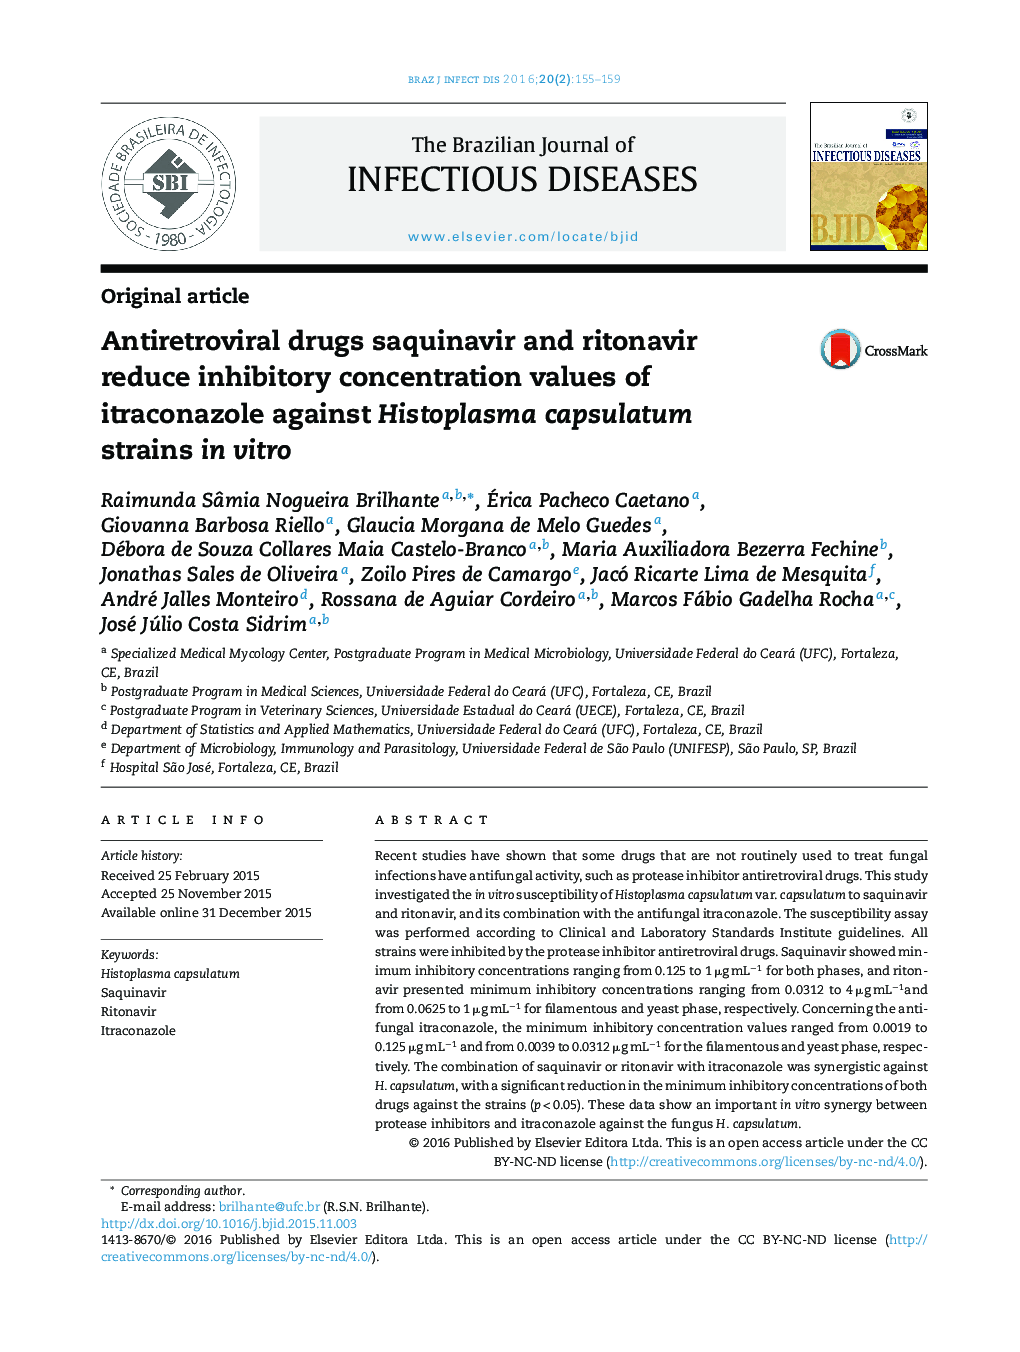 Antiretroviral drugs saquinavir and ritonavir reduce inhibitory concentration values of itraconazole against Histoplasma capsulatum strains in vitro